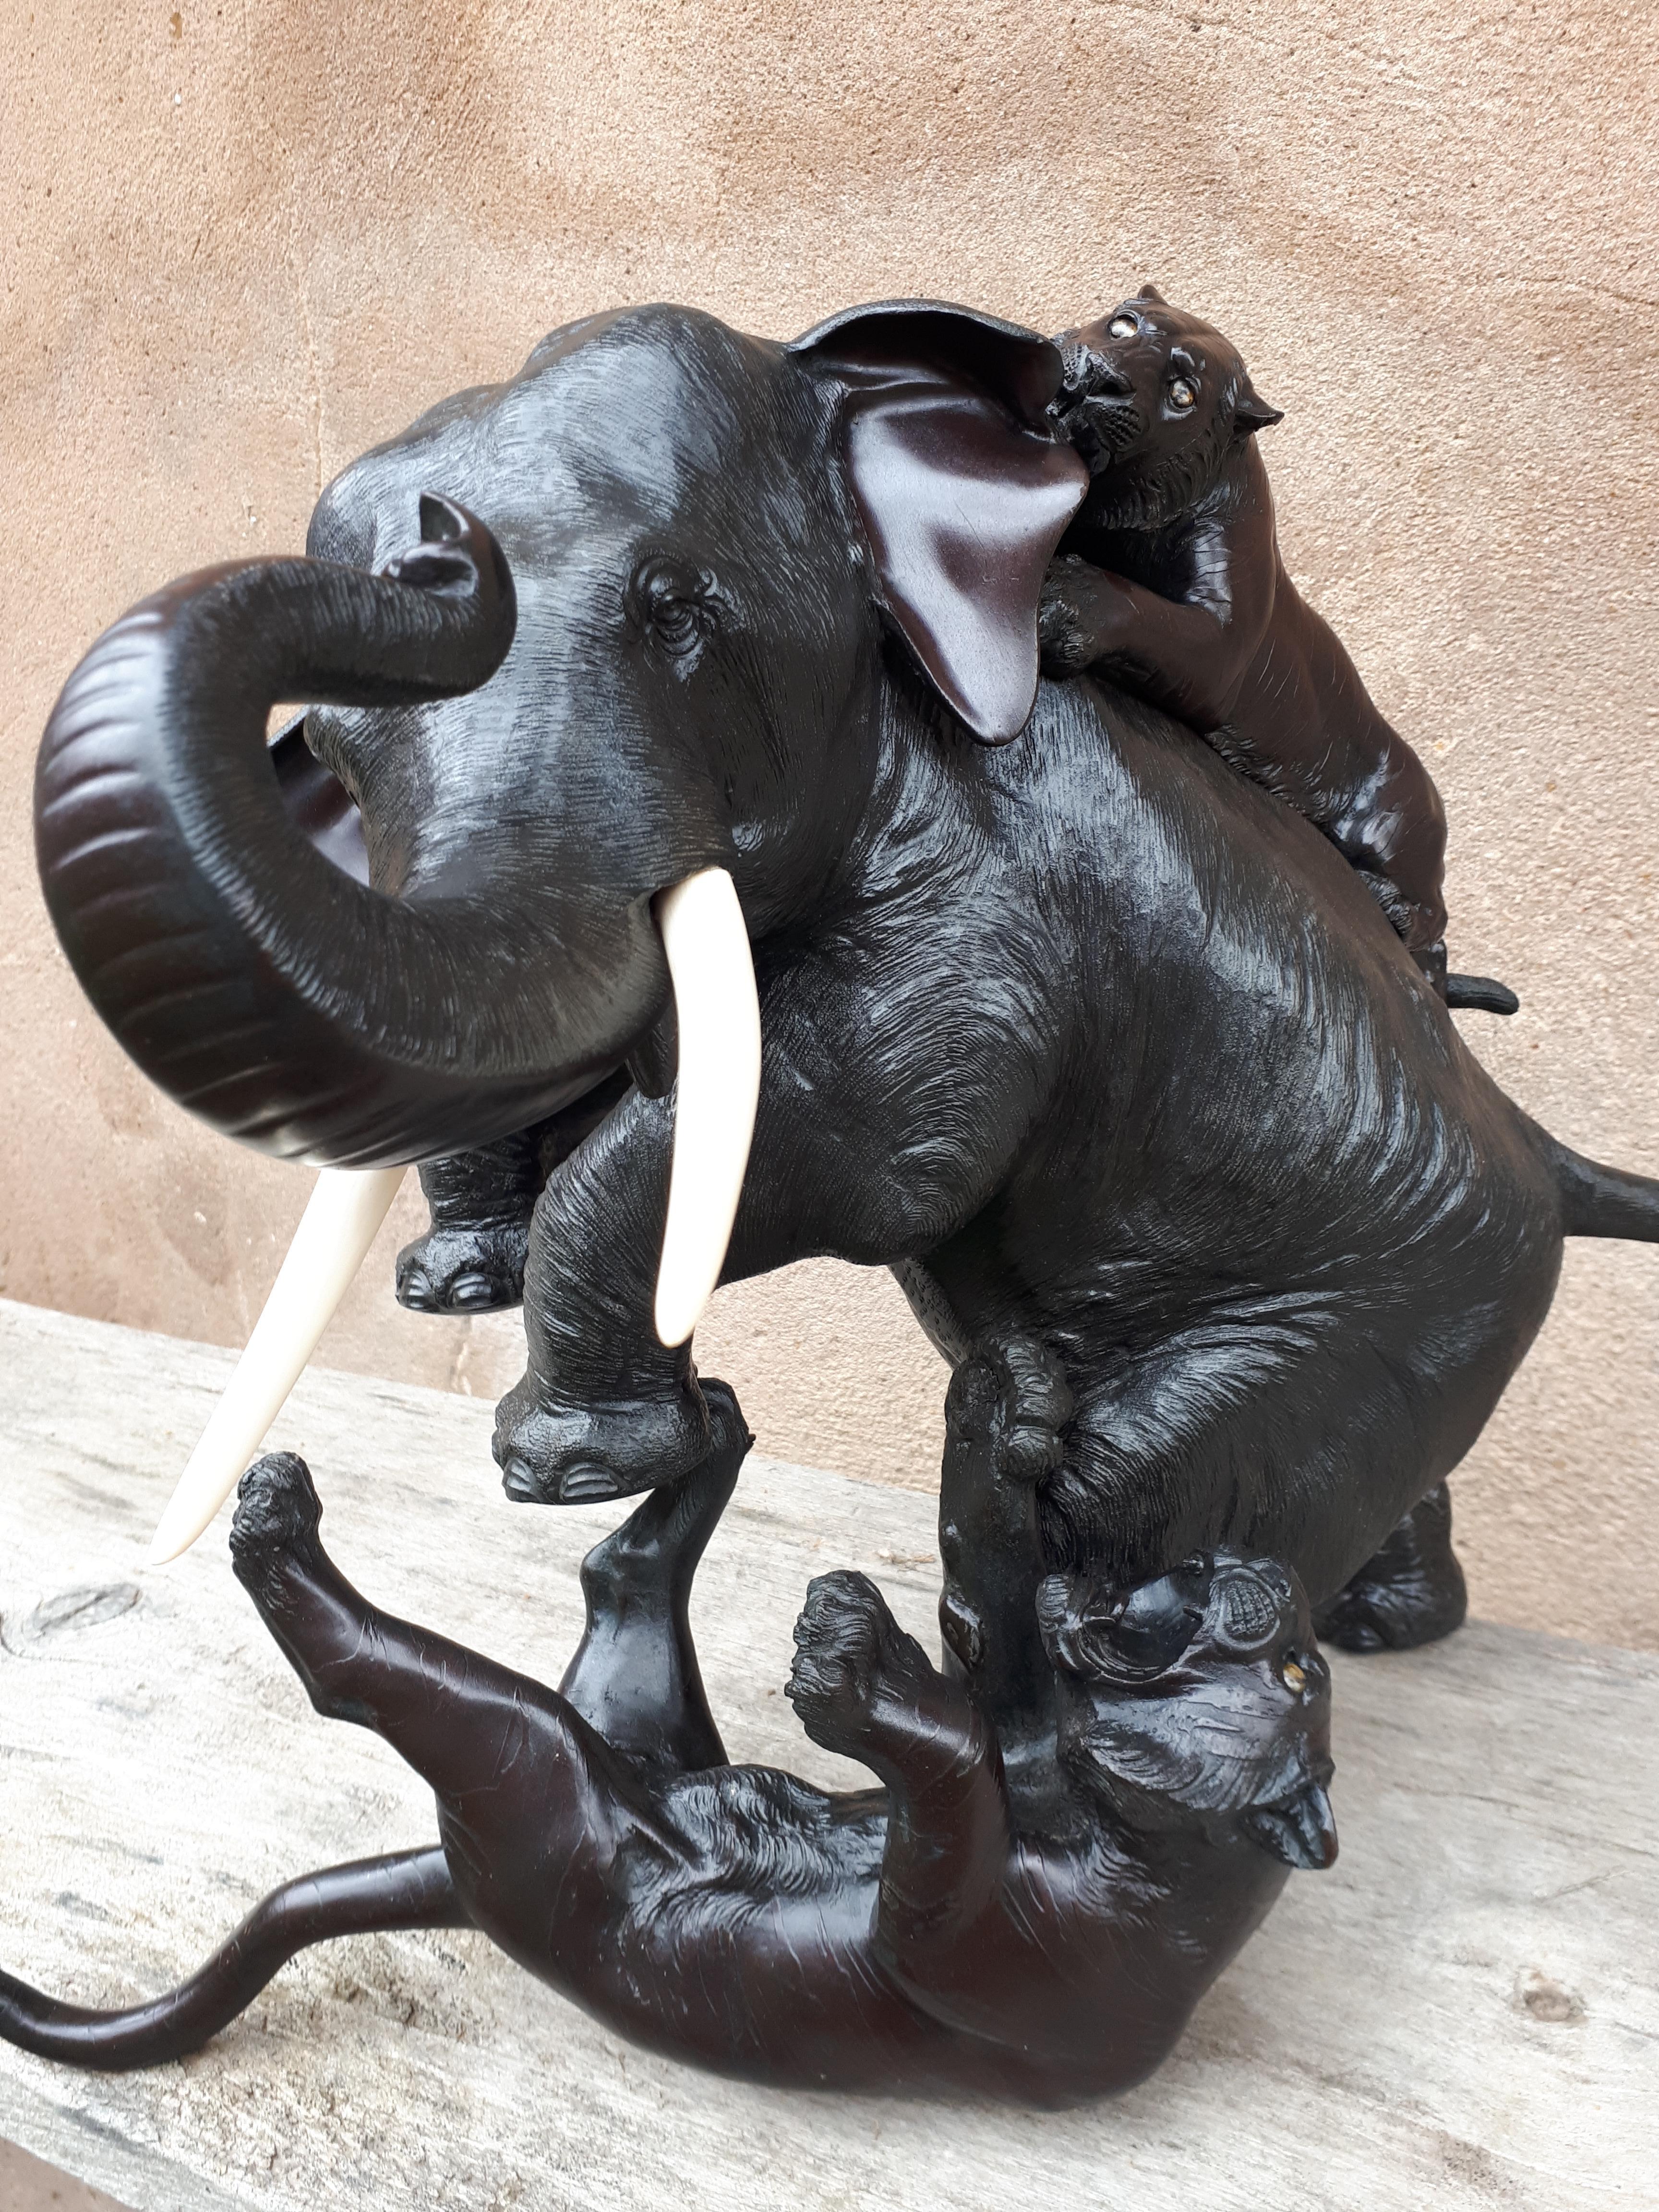 Okimono - Bronze Sculpture Of An Elephant Attacked By Tigers, Japan Meiji Era 6